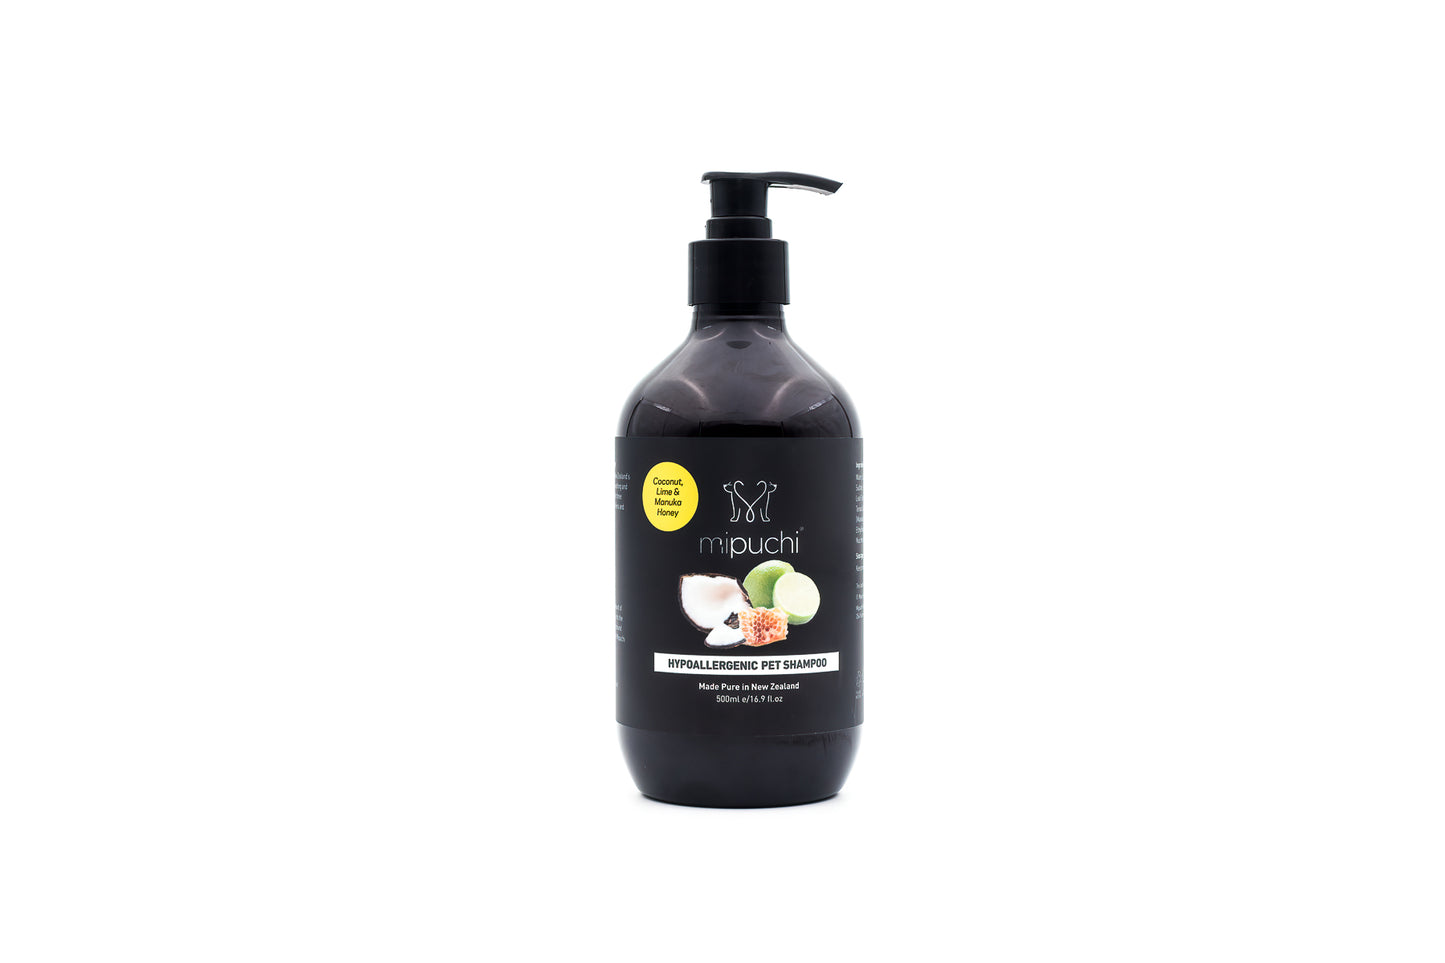 Mipuchi Hypoallergenic Pet Shampoo – Coconut, Lime & Manuka Honey 500ml